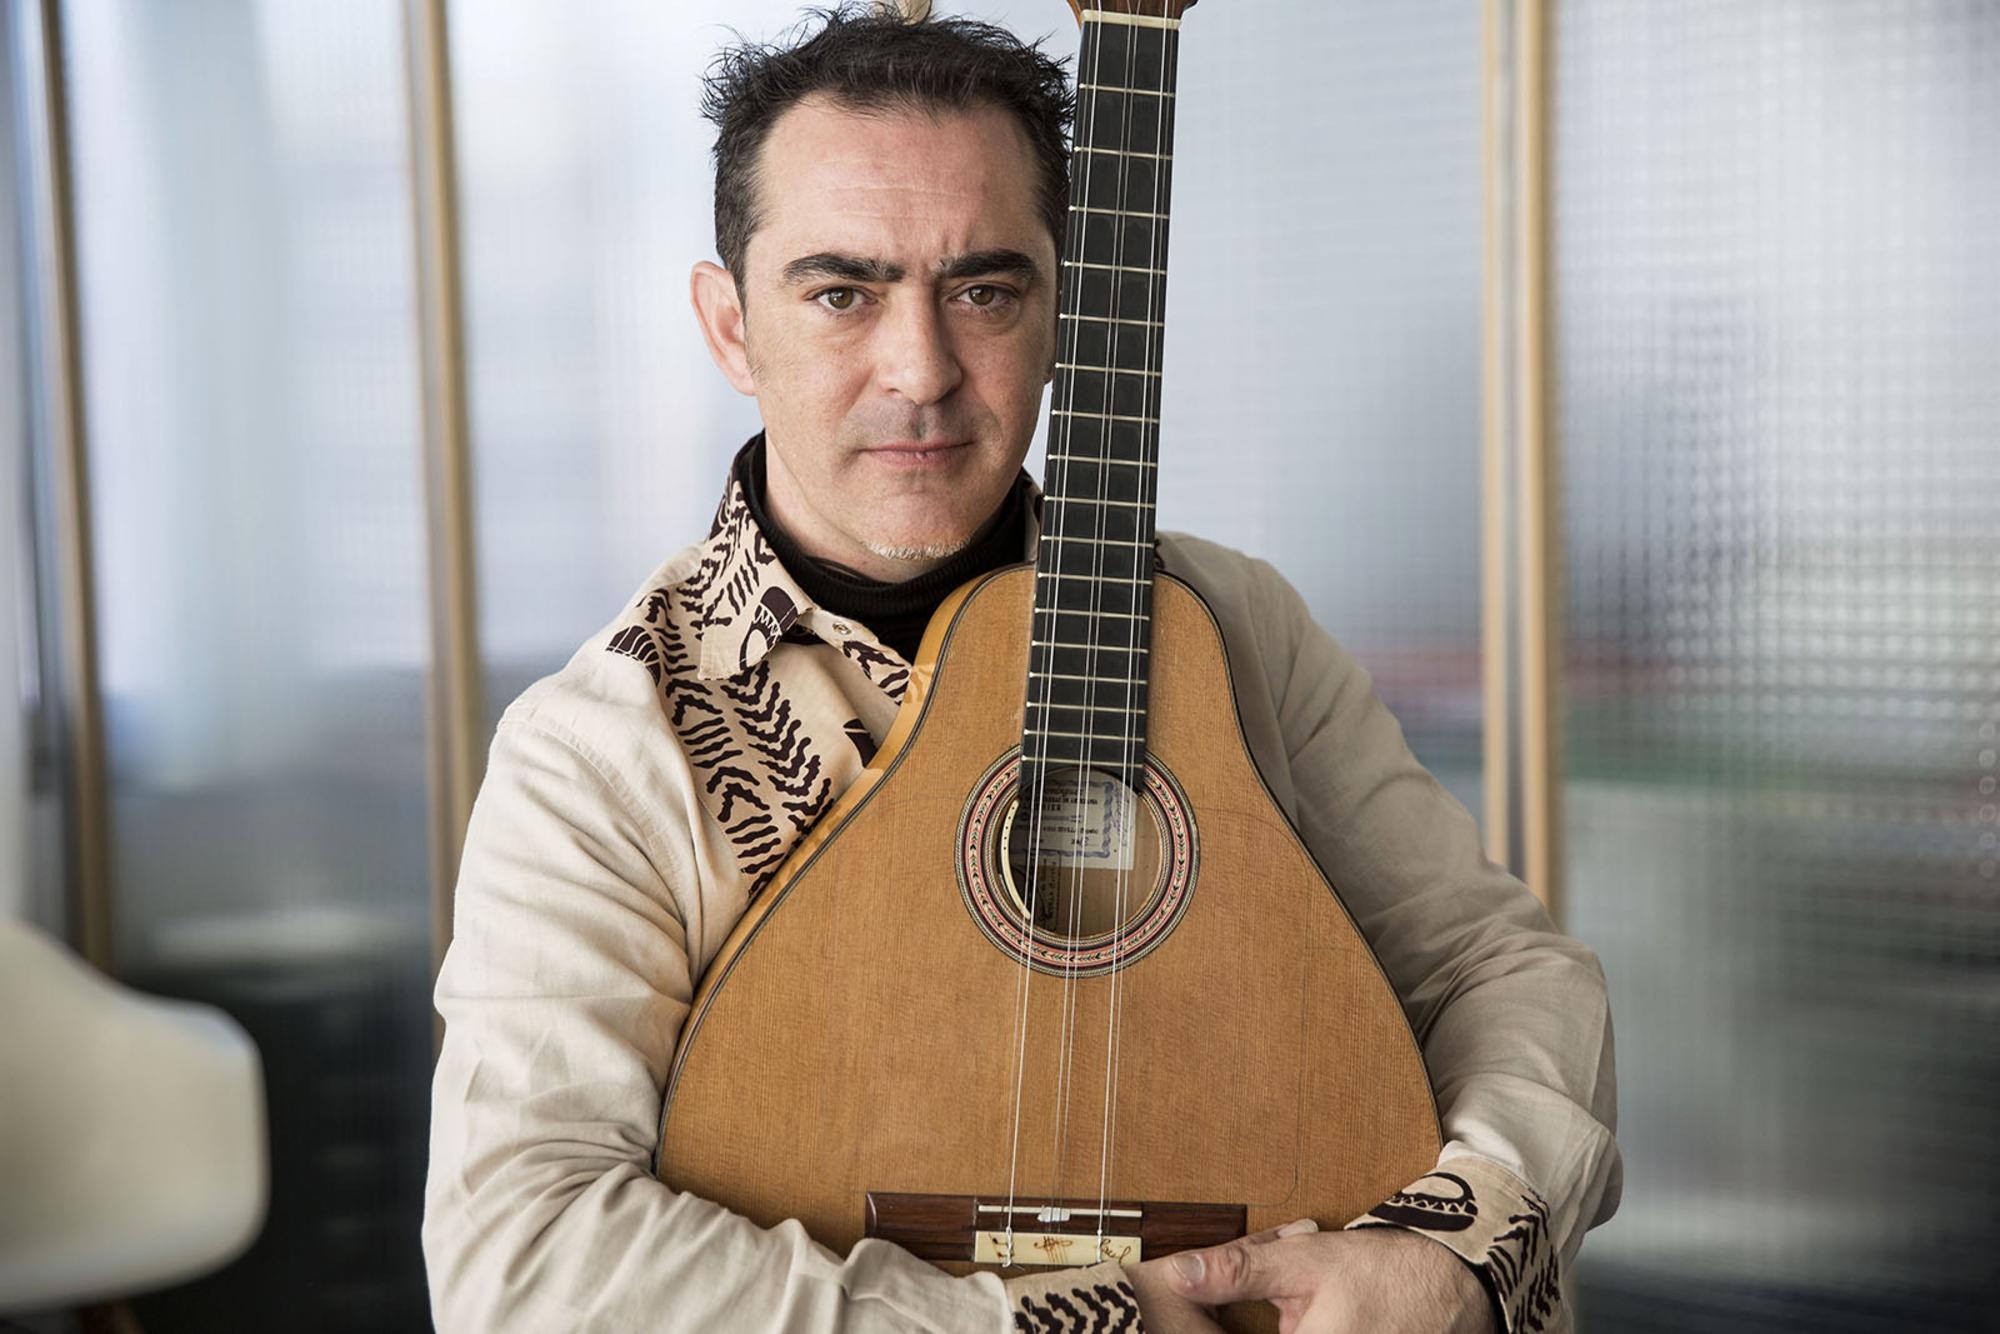 Raúl Rodríguez